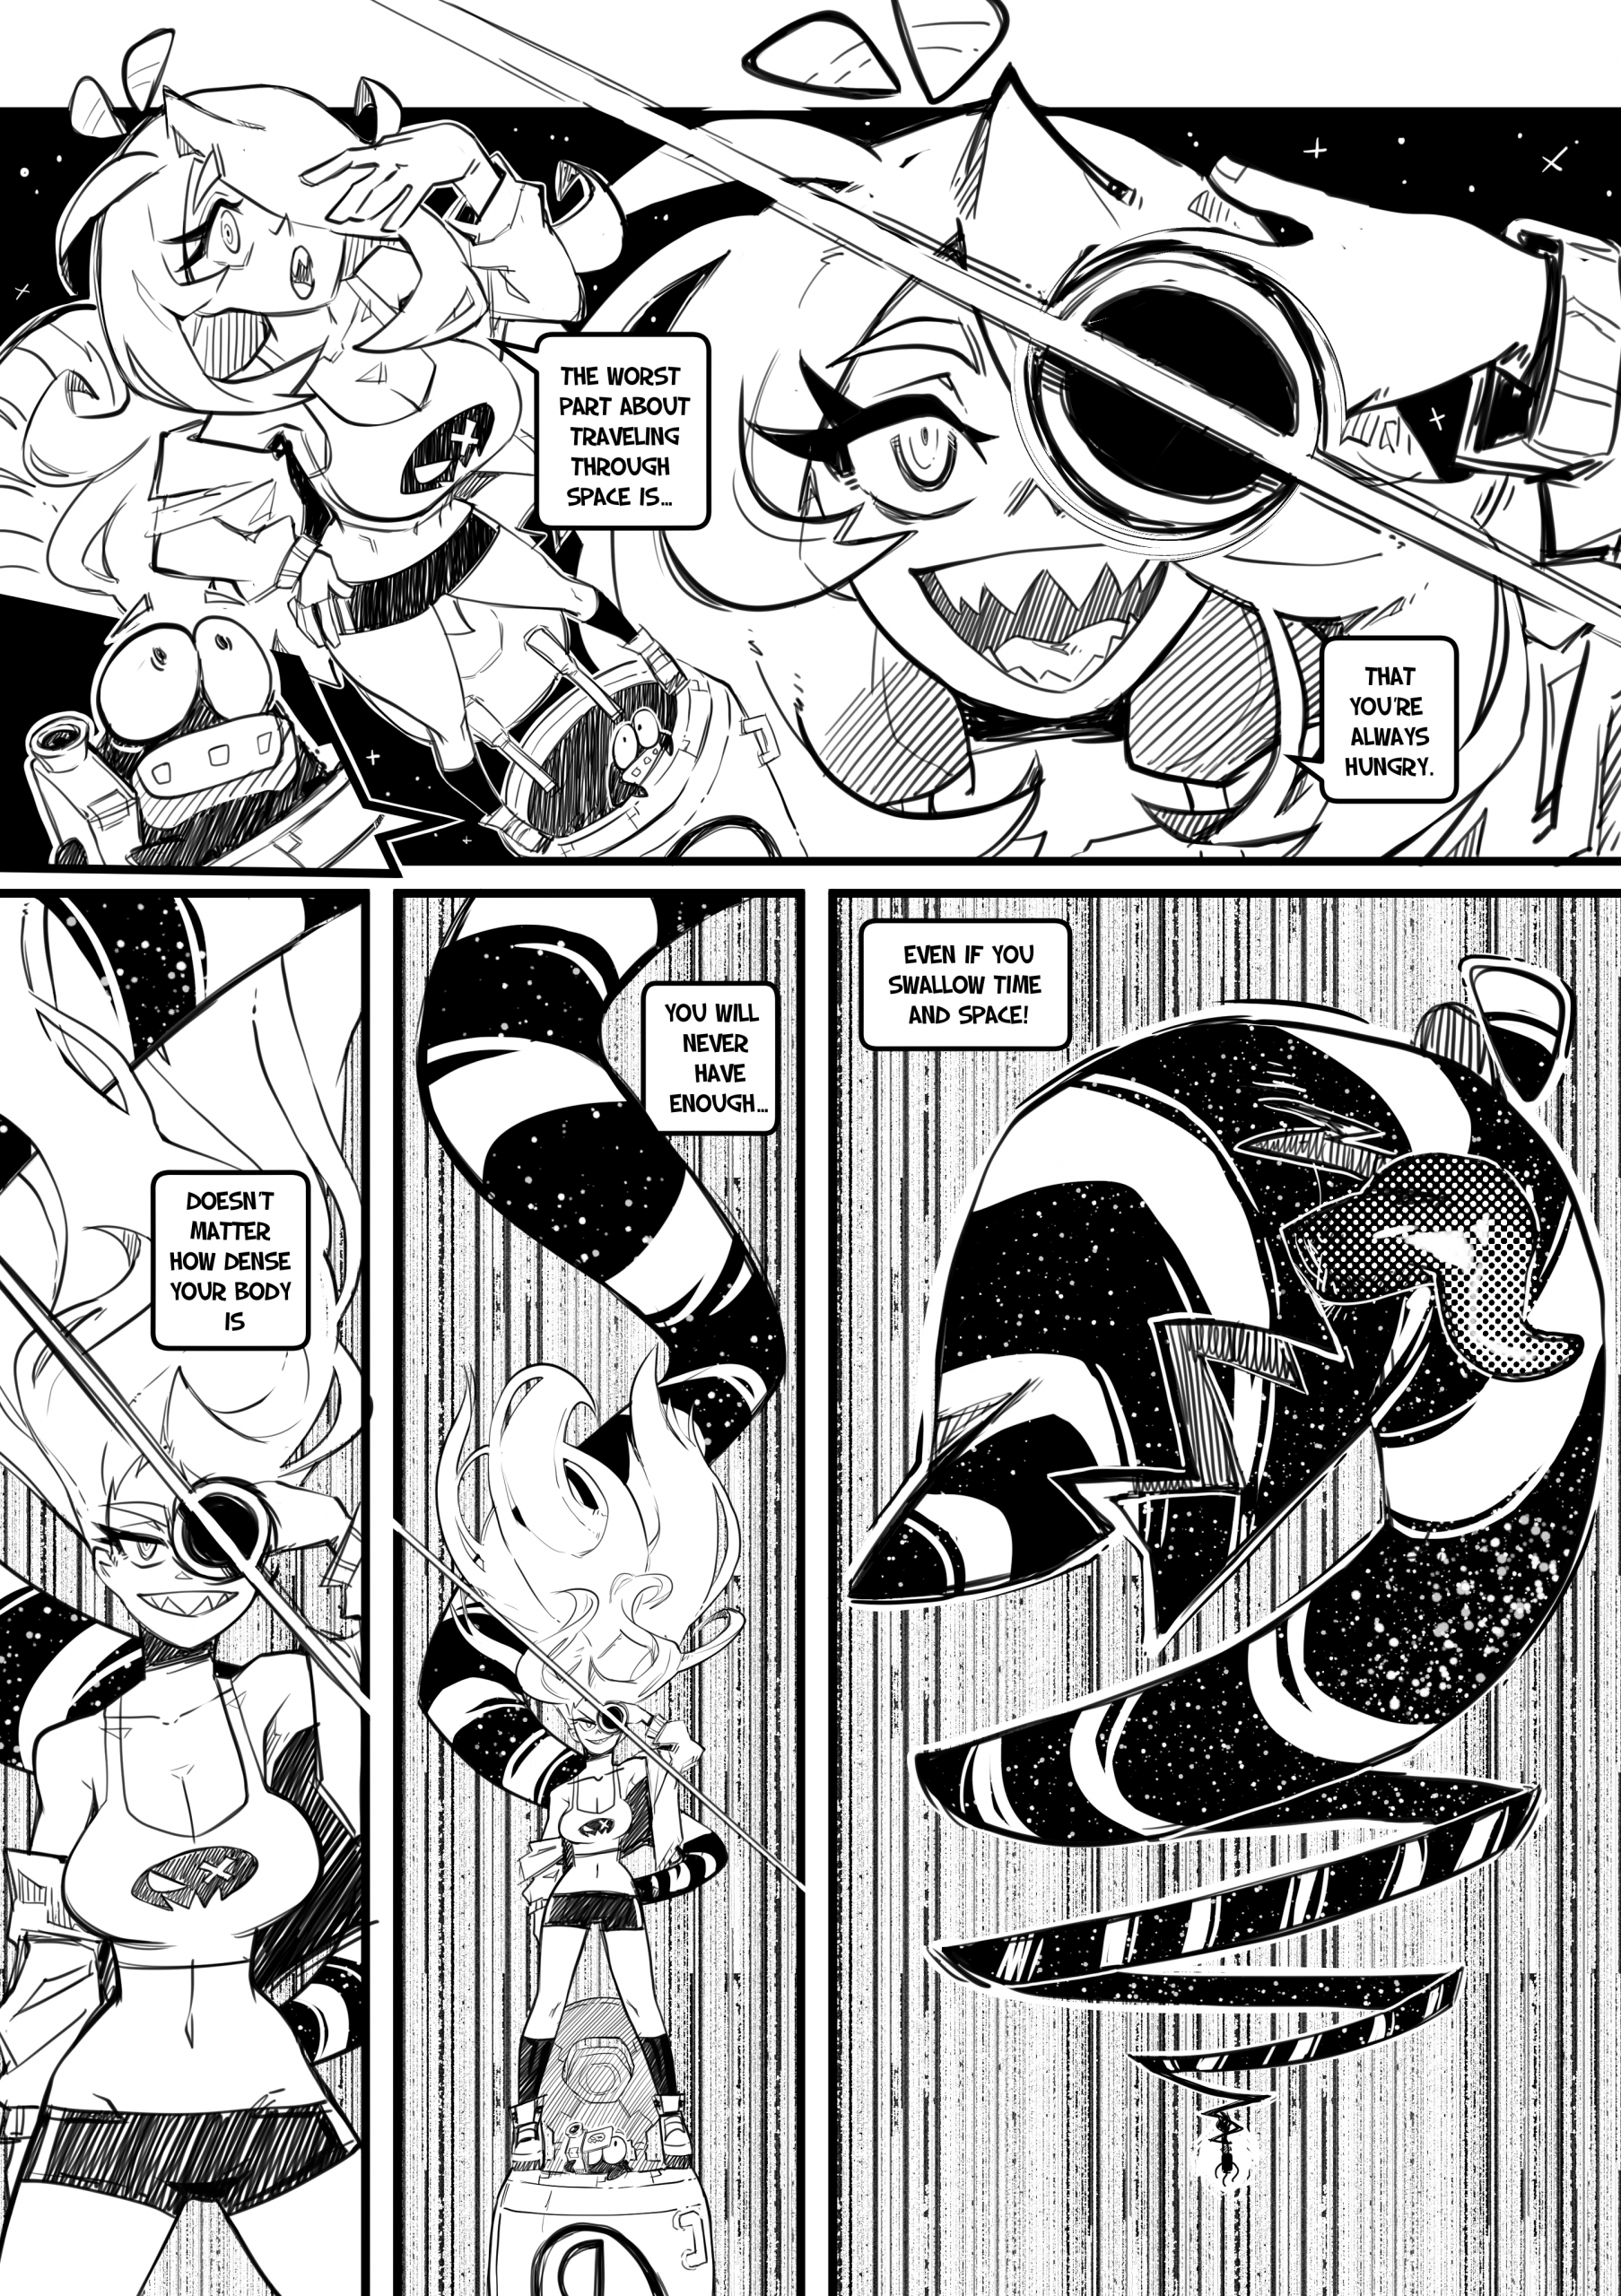 Skarpworld 10: Milk Crisis 4 - Gravity porn comic picture 27